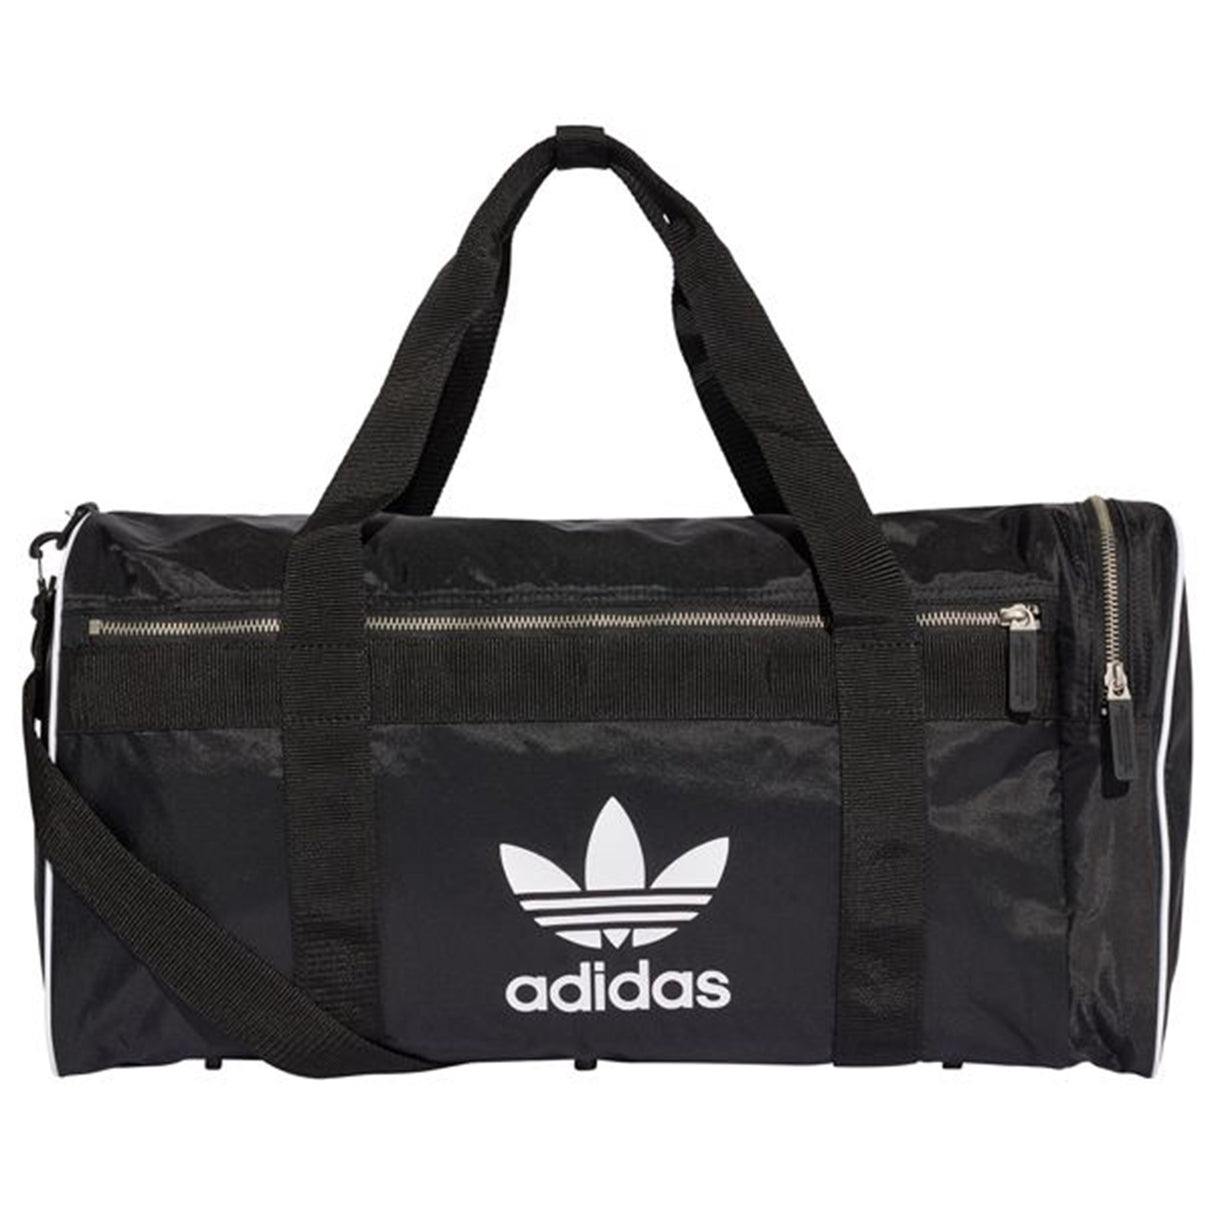 adidas Sport Bag Black